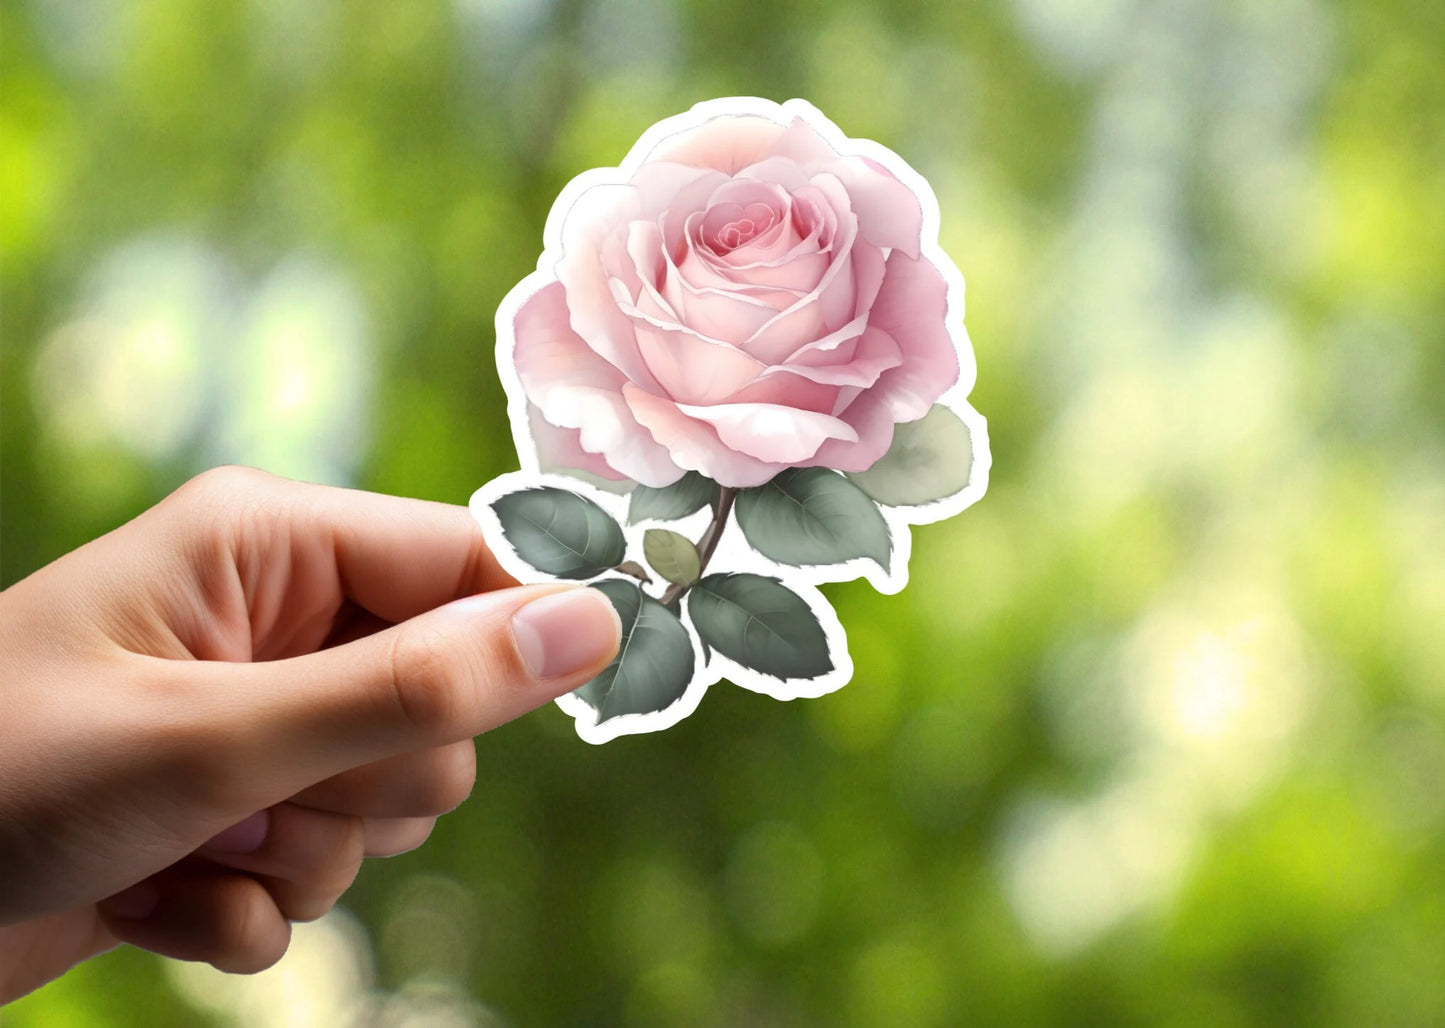 Pink Rose Sticker